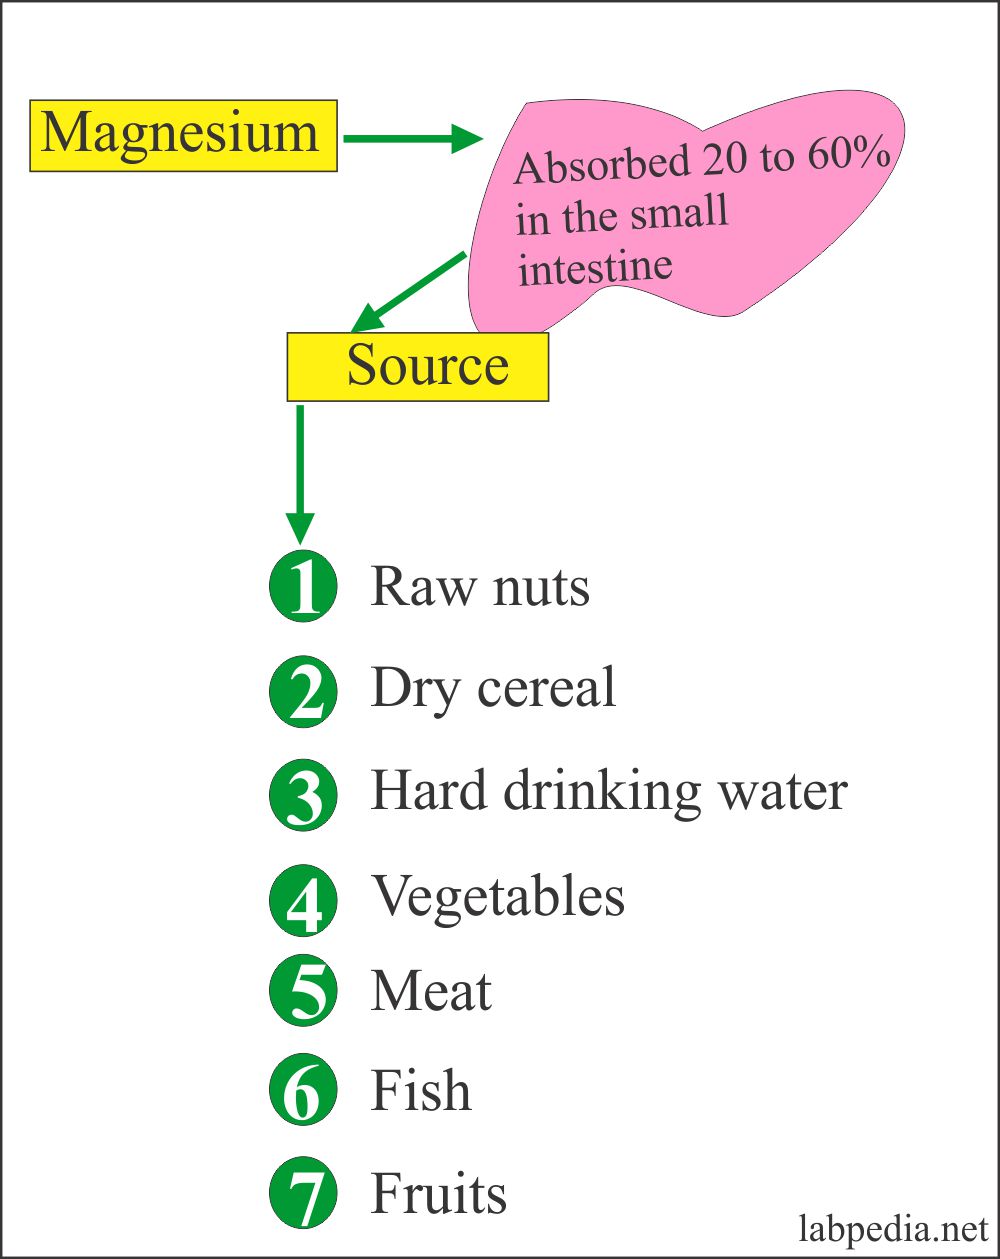 Magnesium level (Mg): Sources of Magnesium